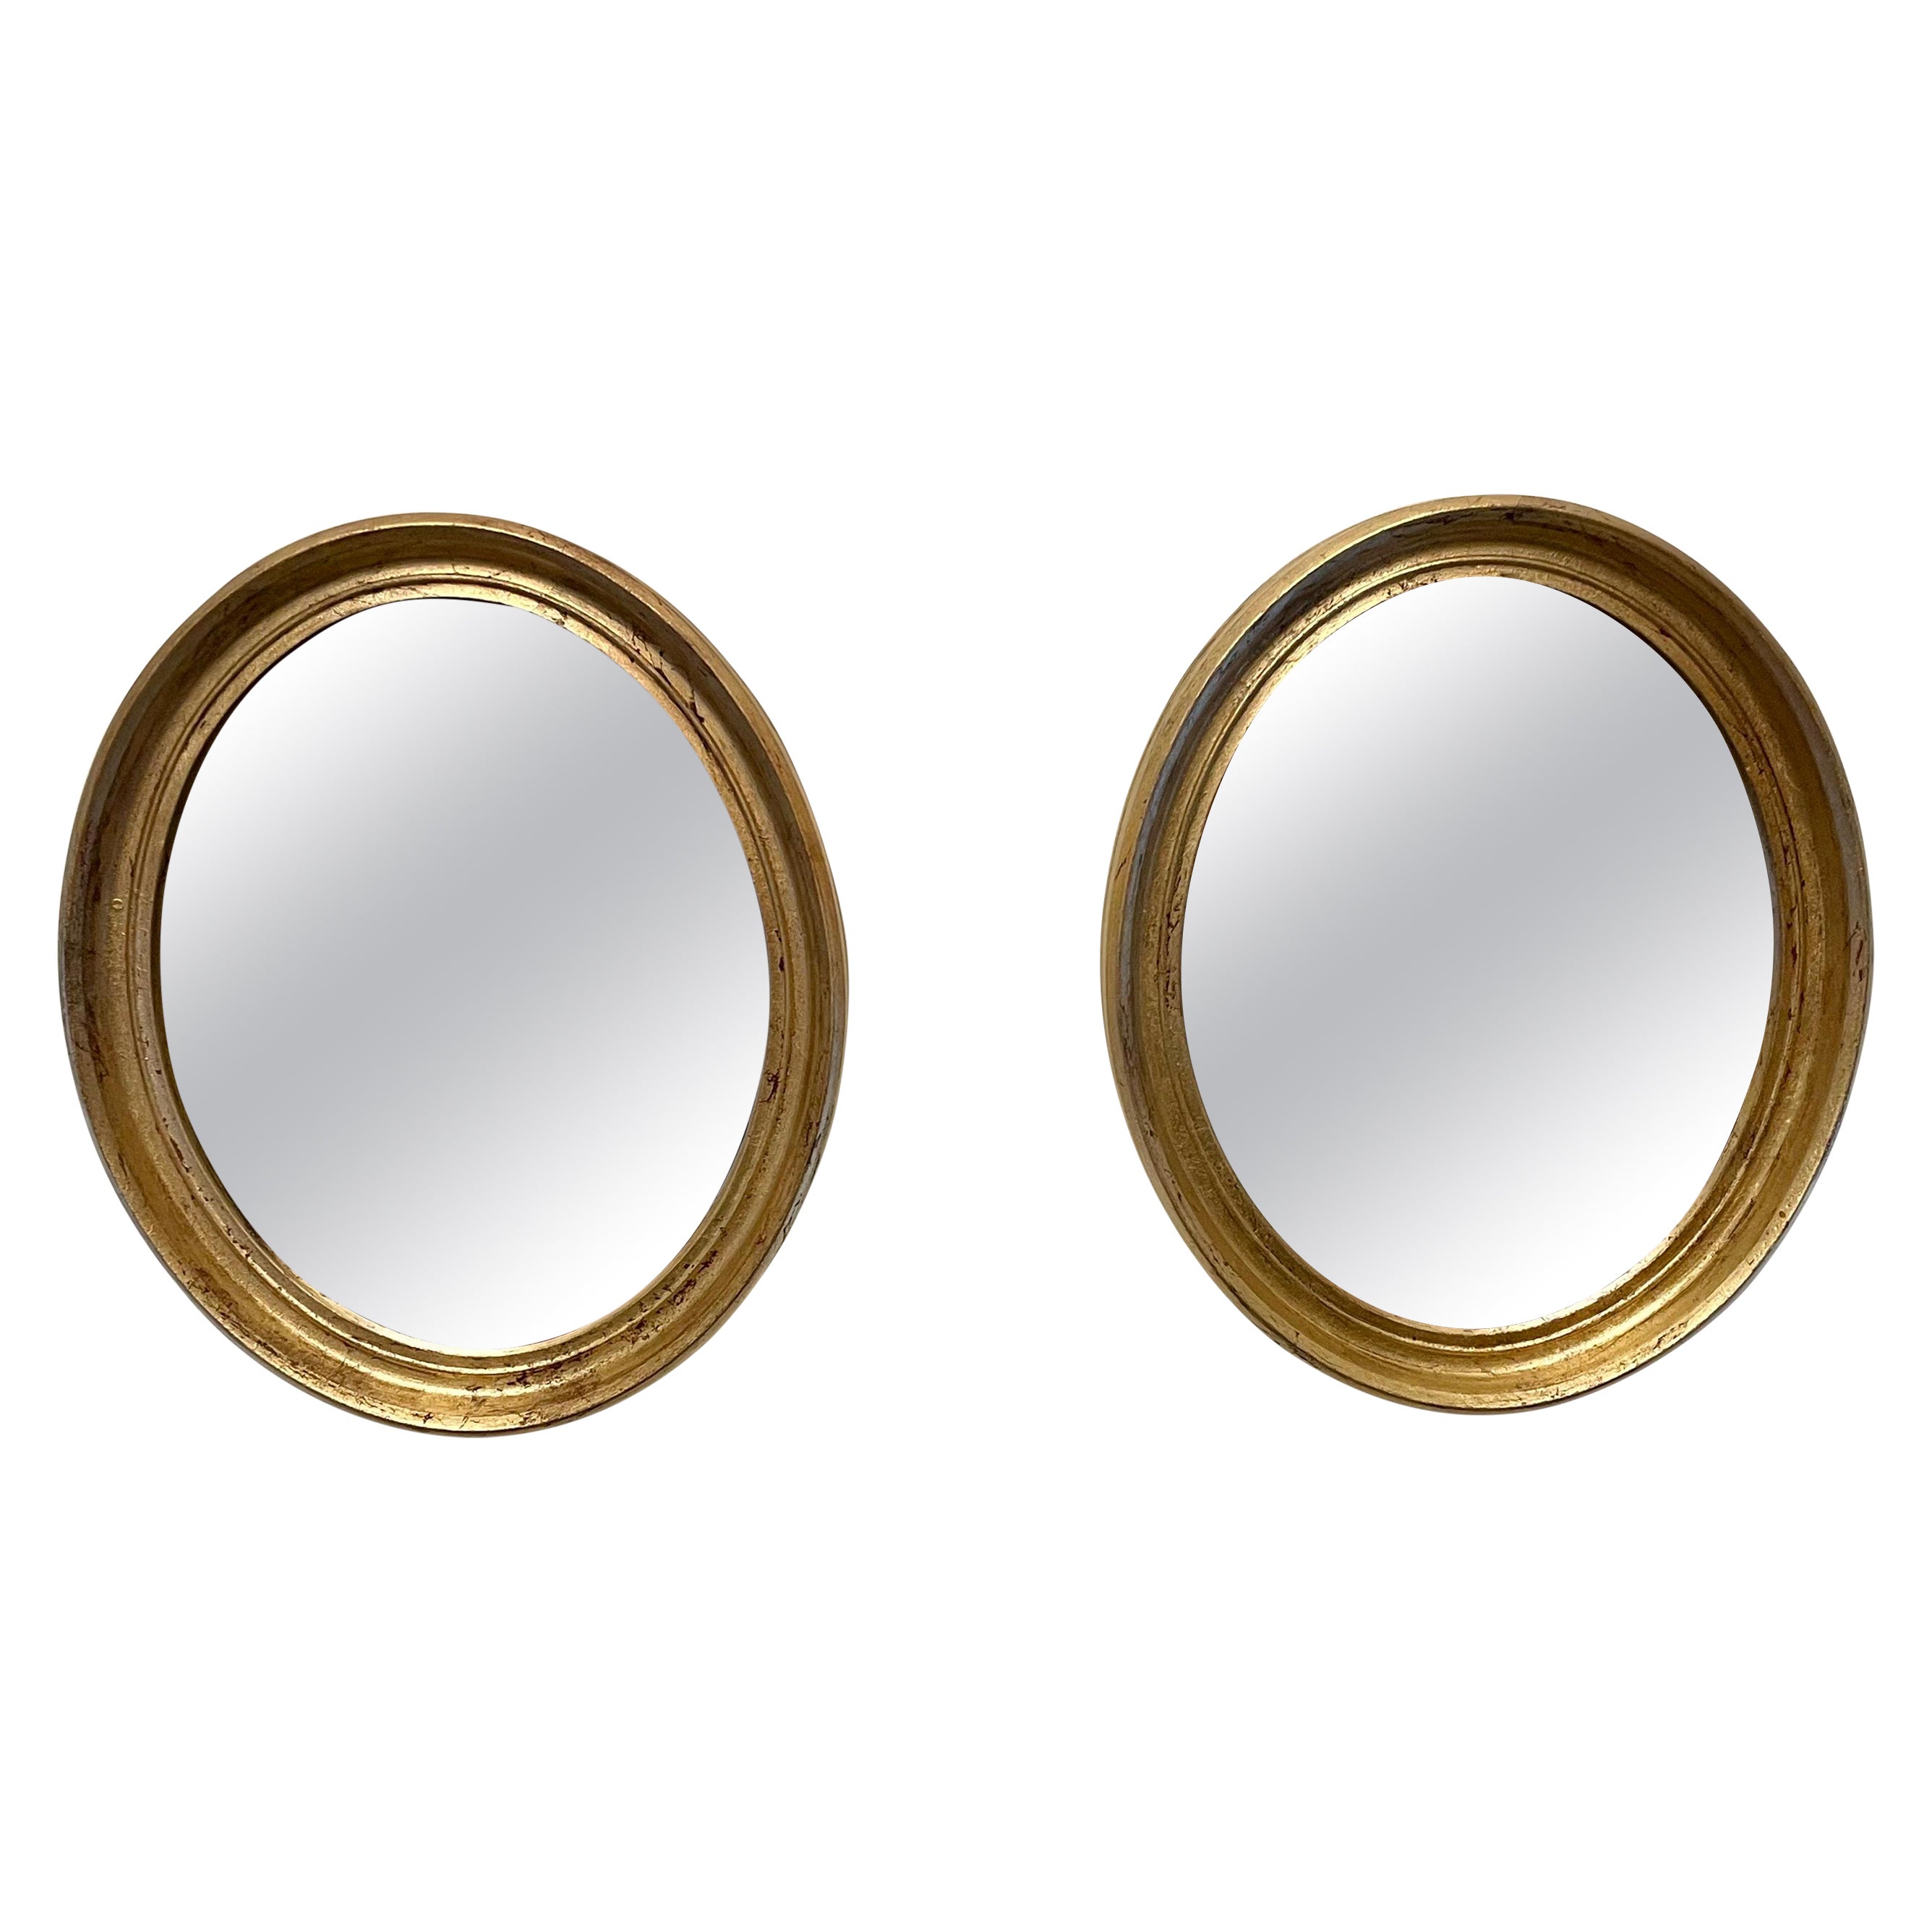 Pair of Vintage Gilt Oval Italian Mirrors